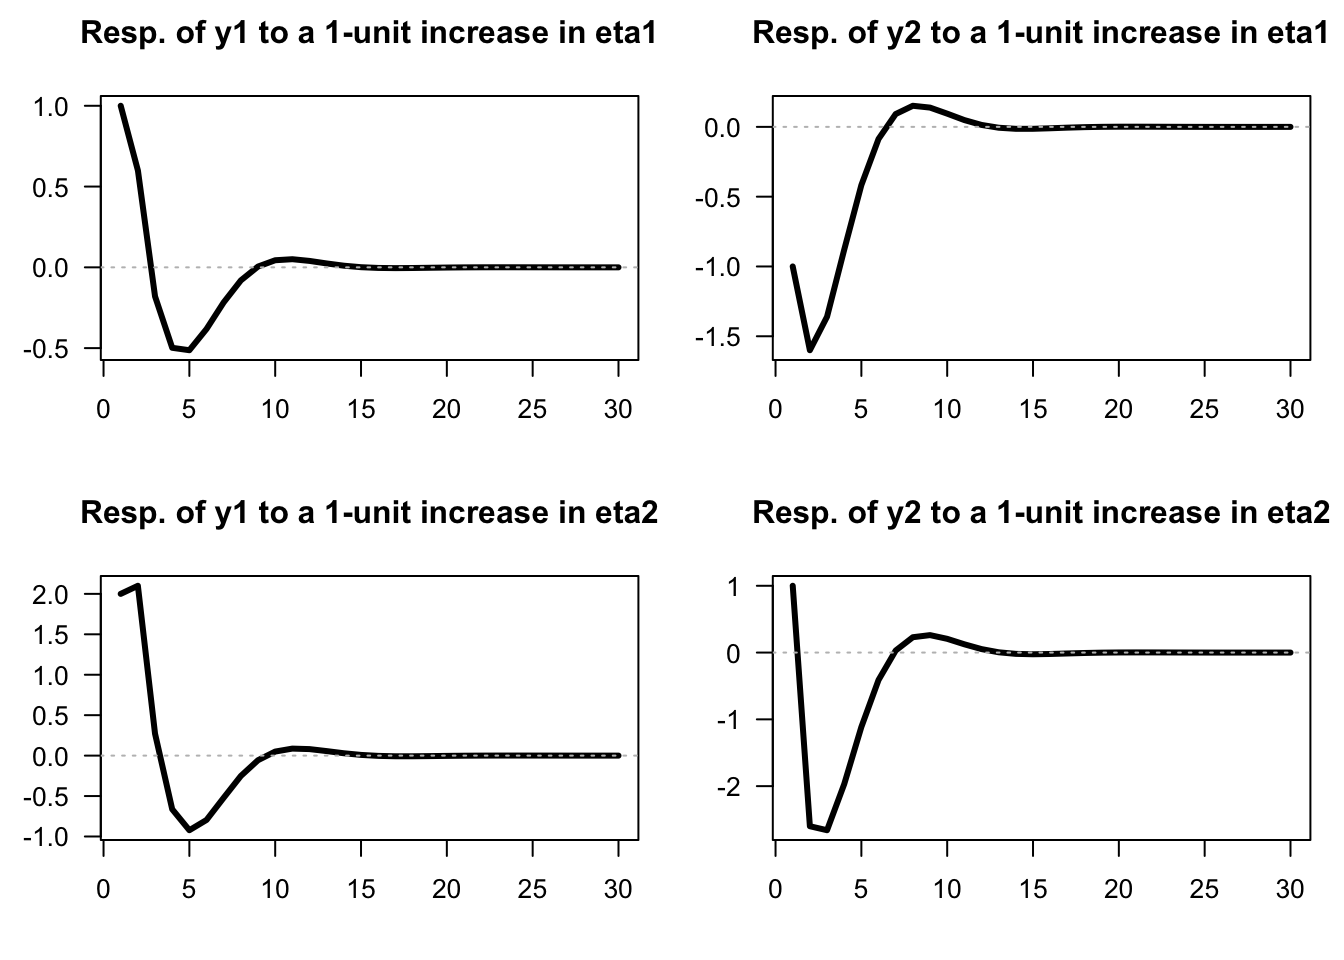 Impulse response functions (SVARMA(1,1) specified above).